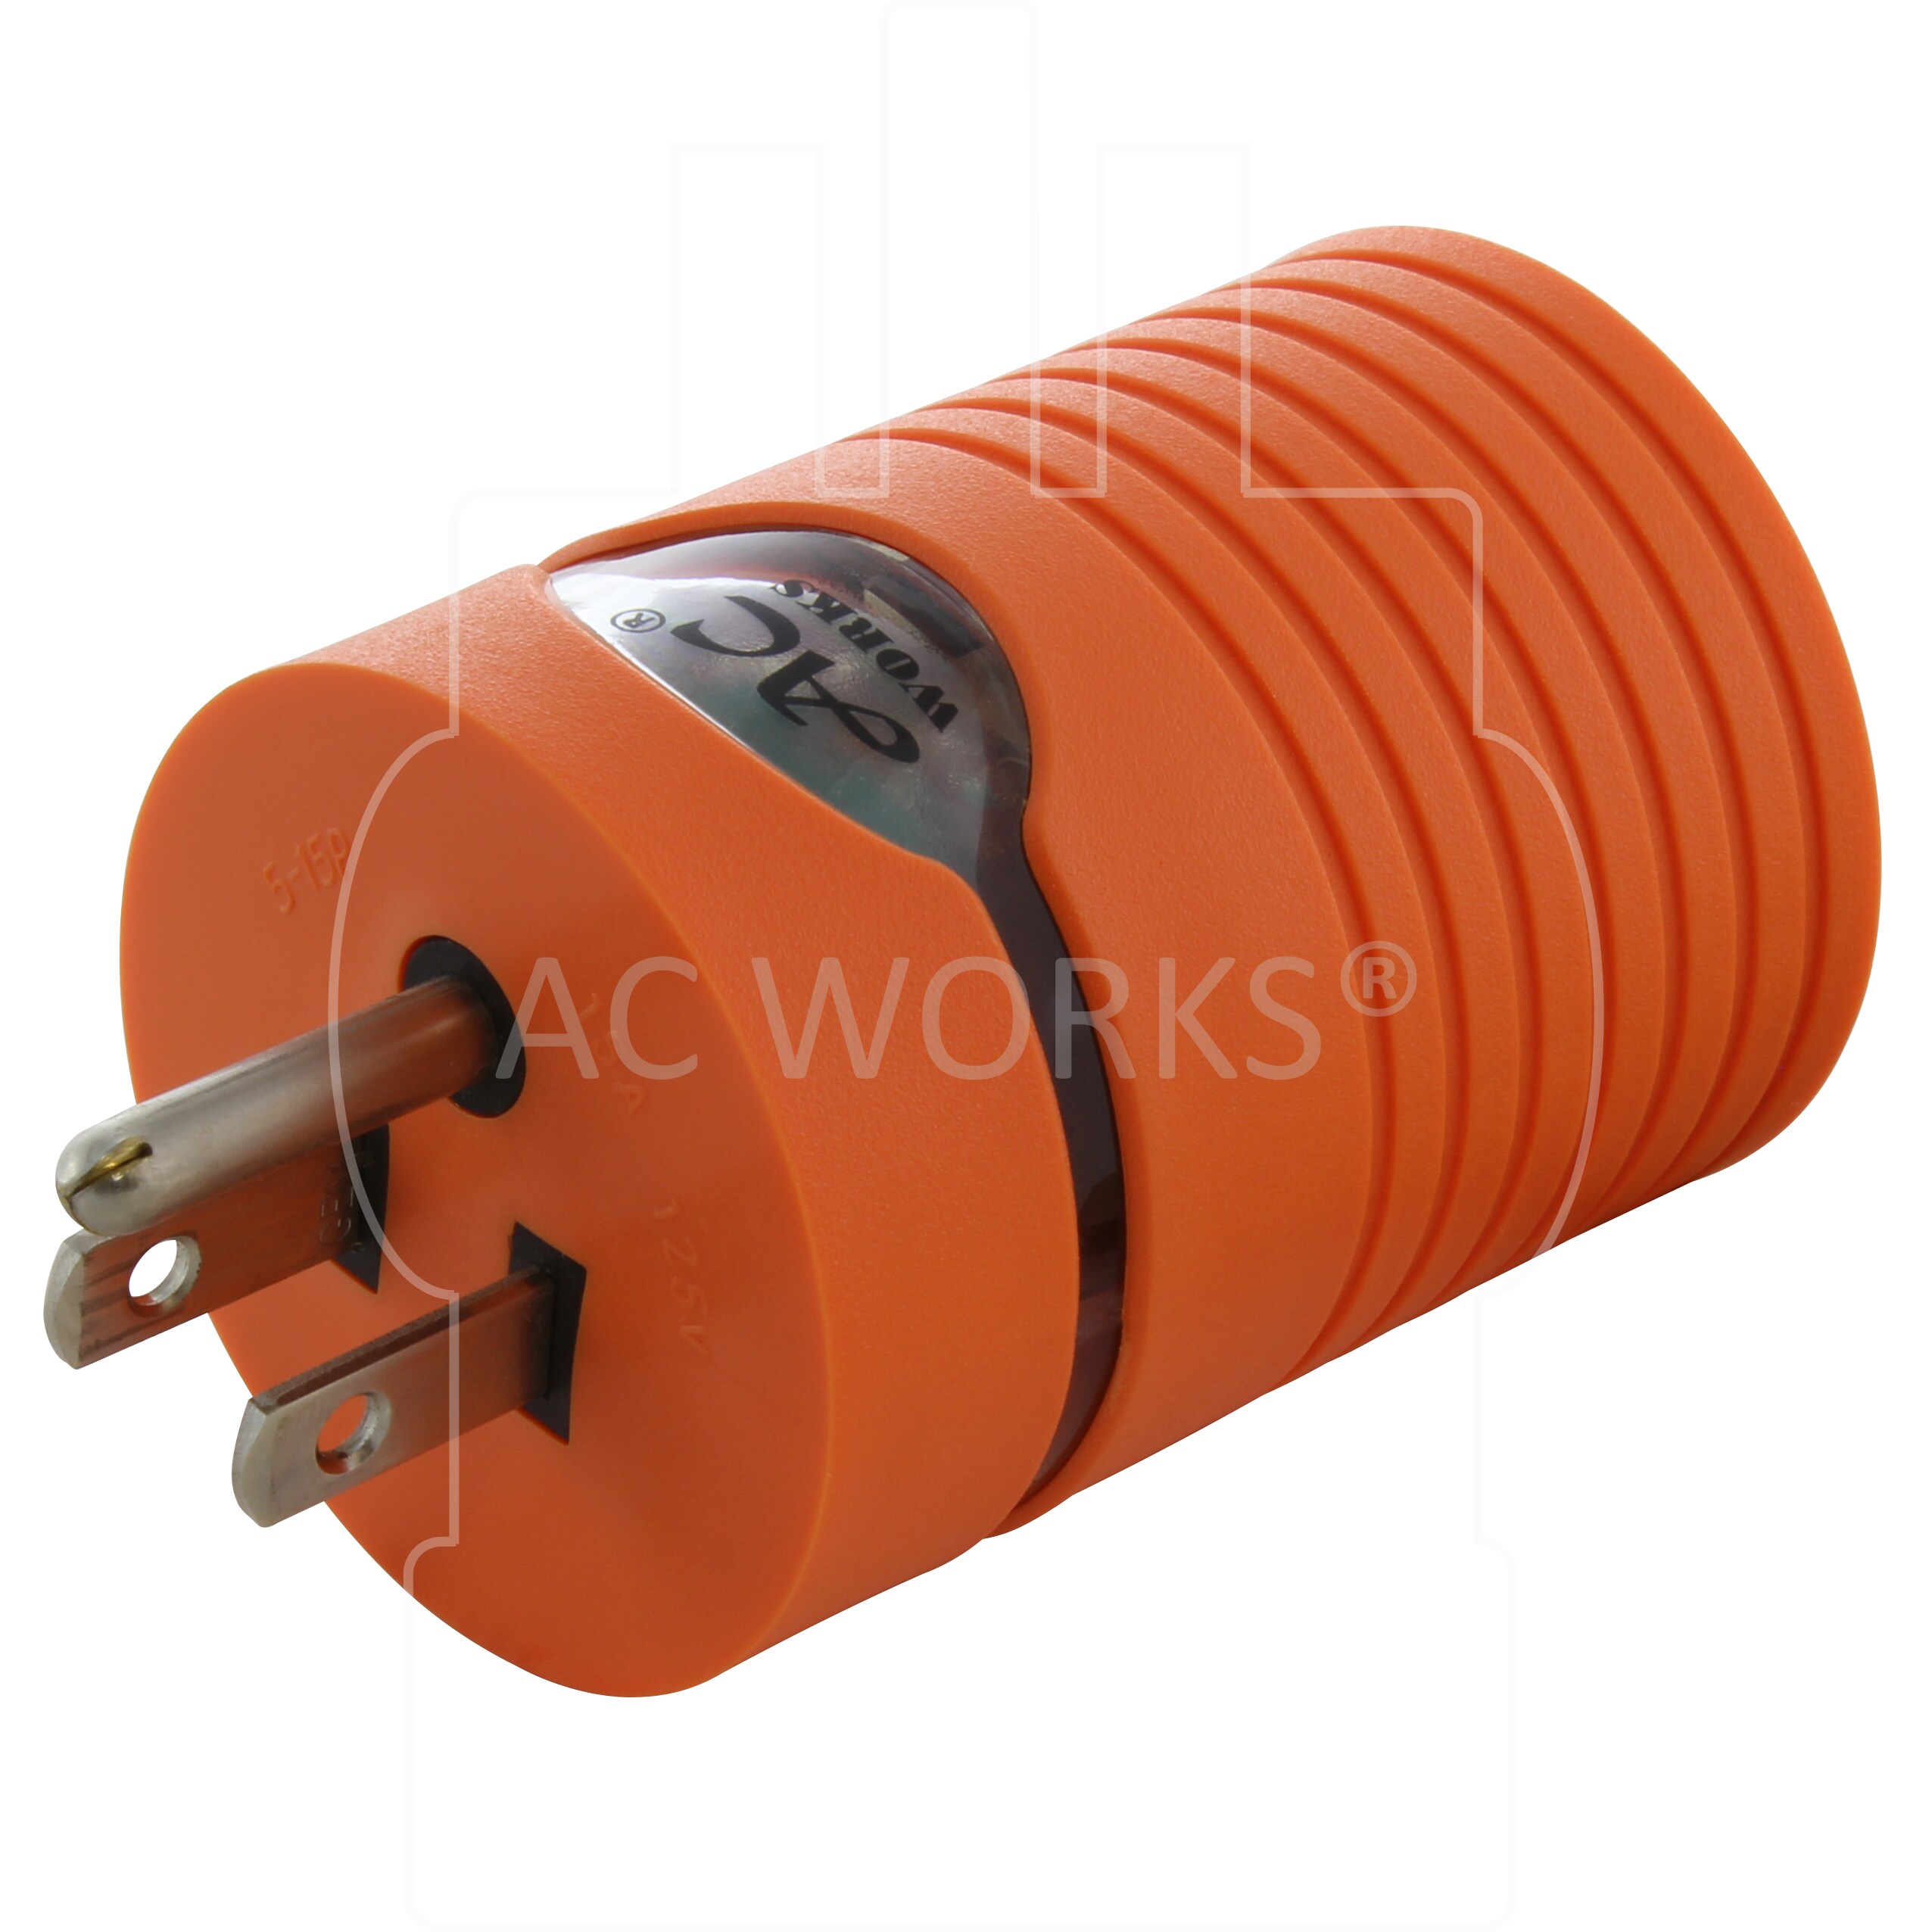 NEMA L5-30P L5-30R 30A 125V Twist Lock Electrical Plug Connector  Male/Female UL 